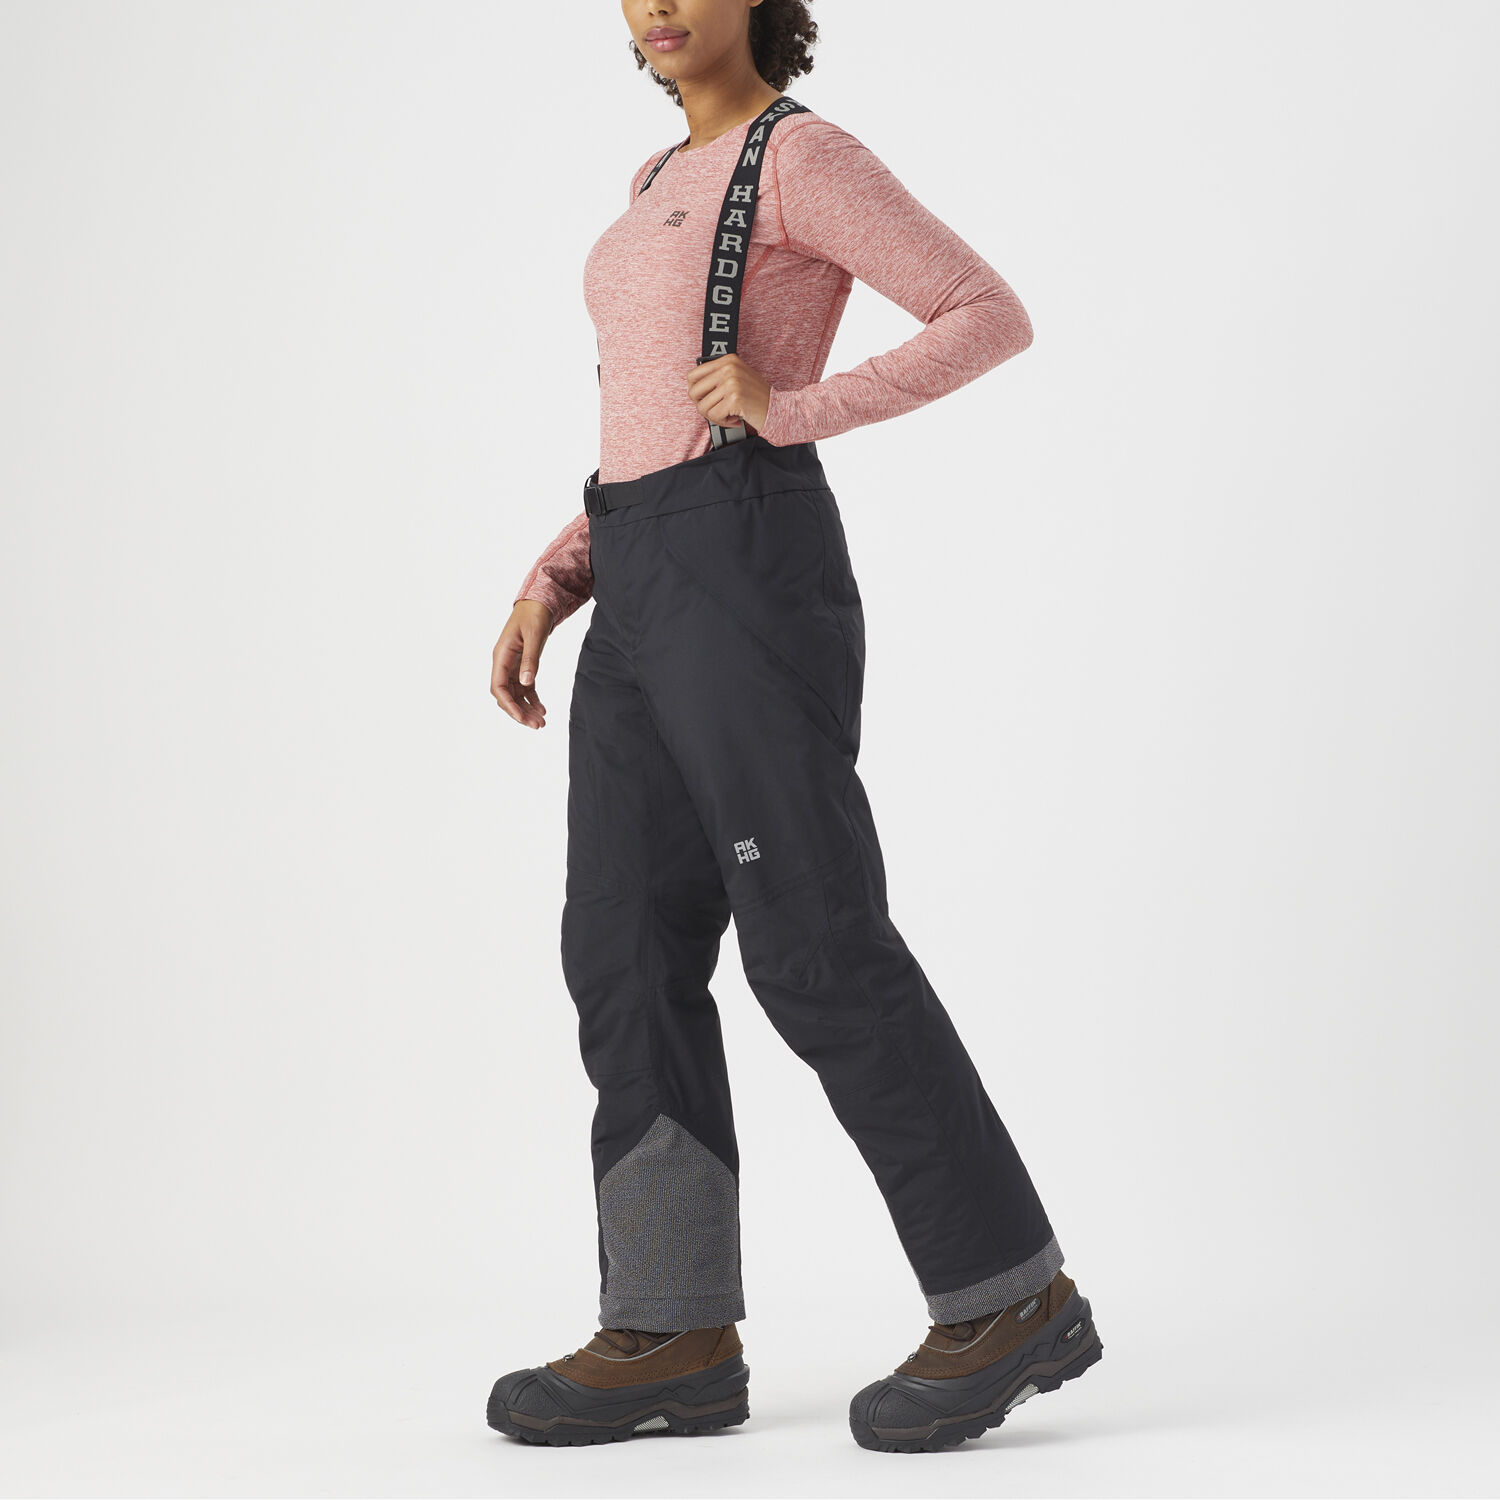 Stoic MountainWool VallrunSt. Ski Pants - Ski Trousers Women's | Buy online  | Alpinetrek.co.uk